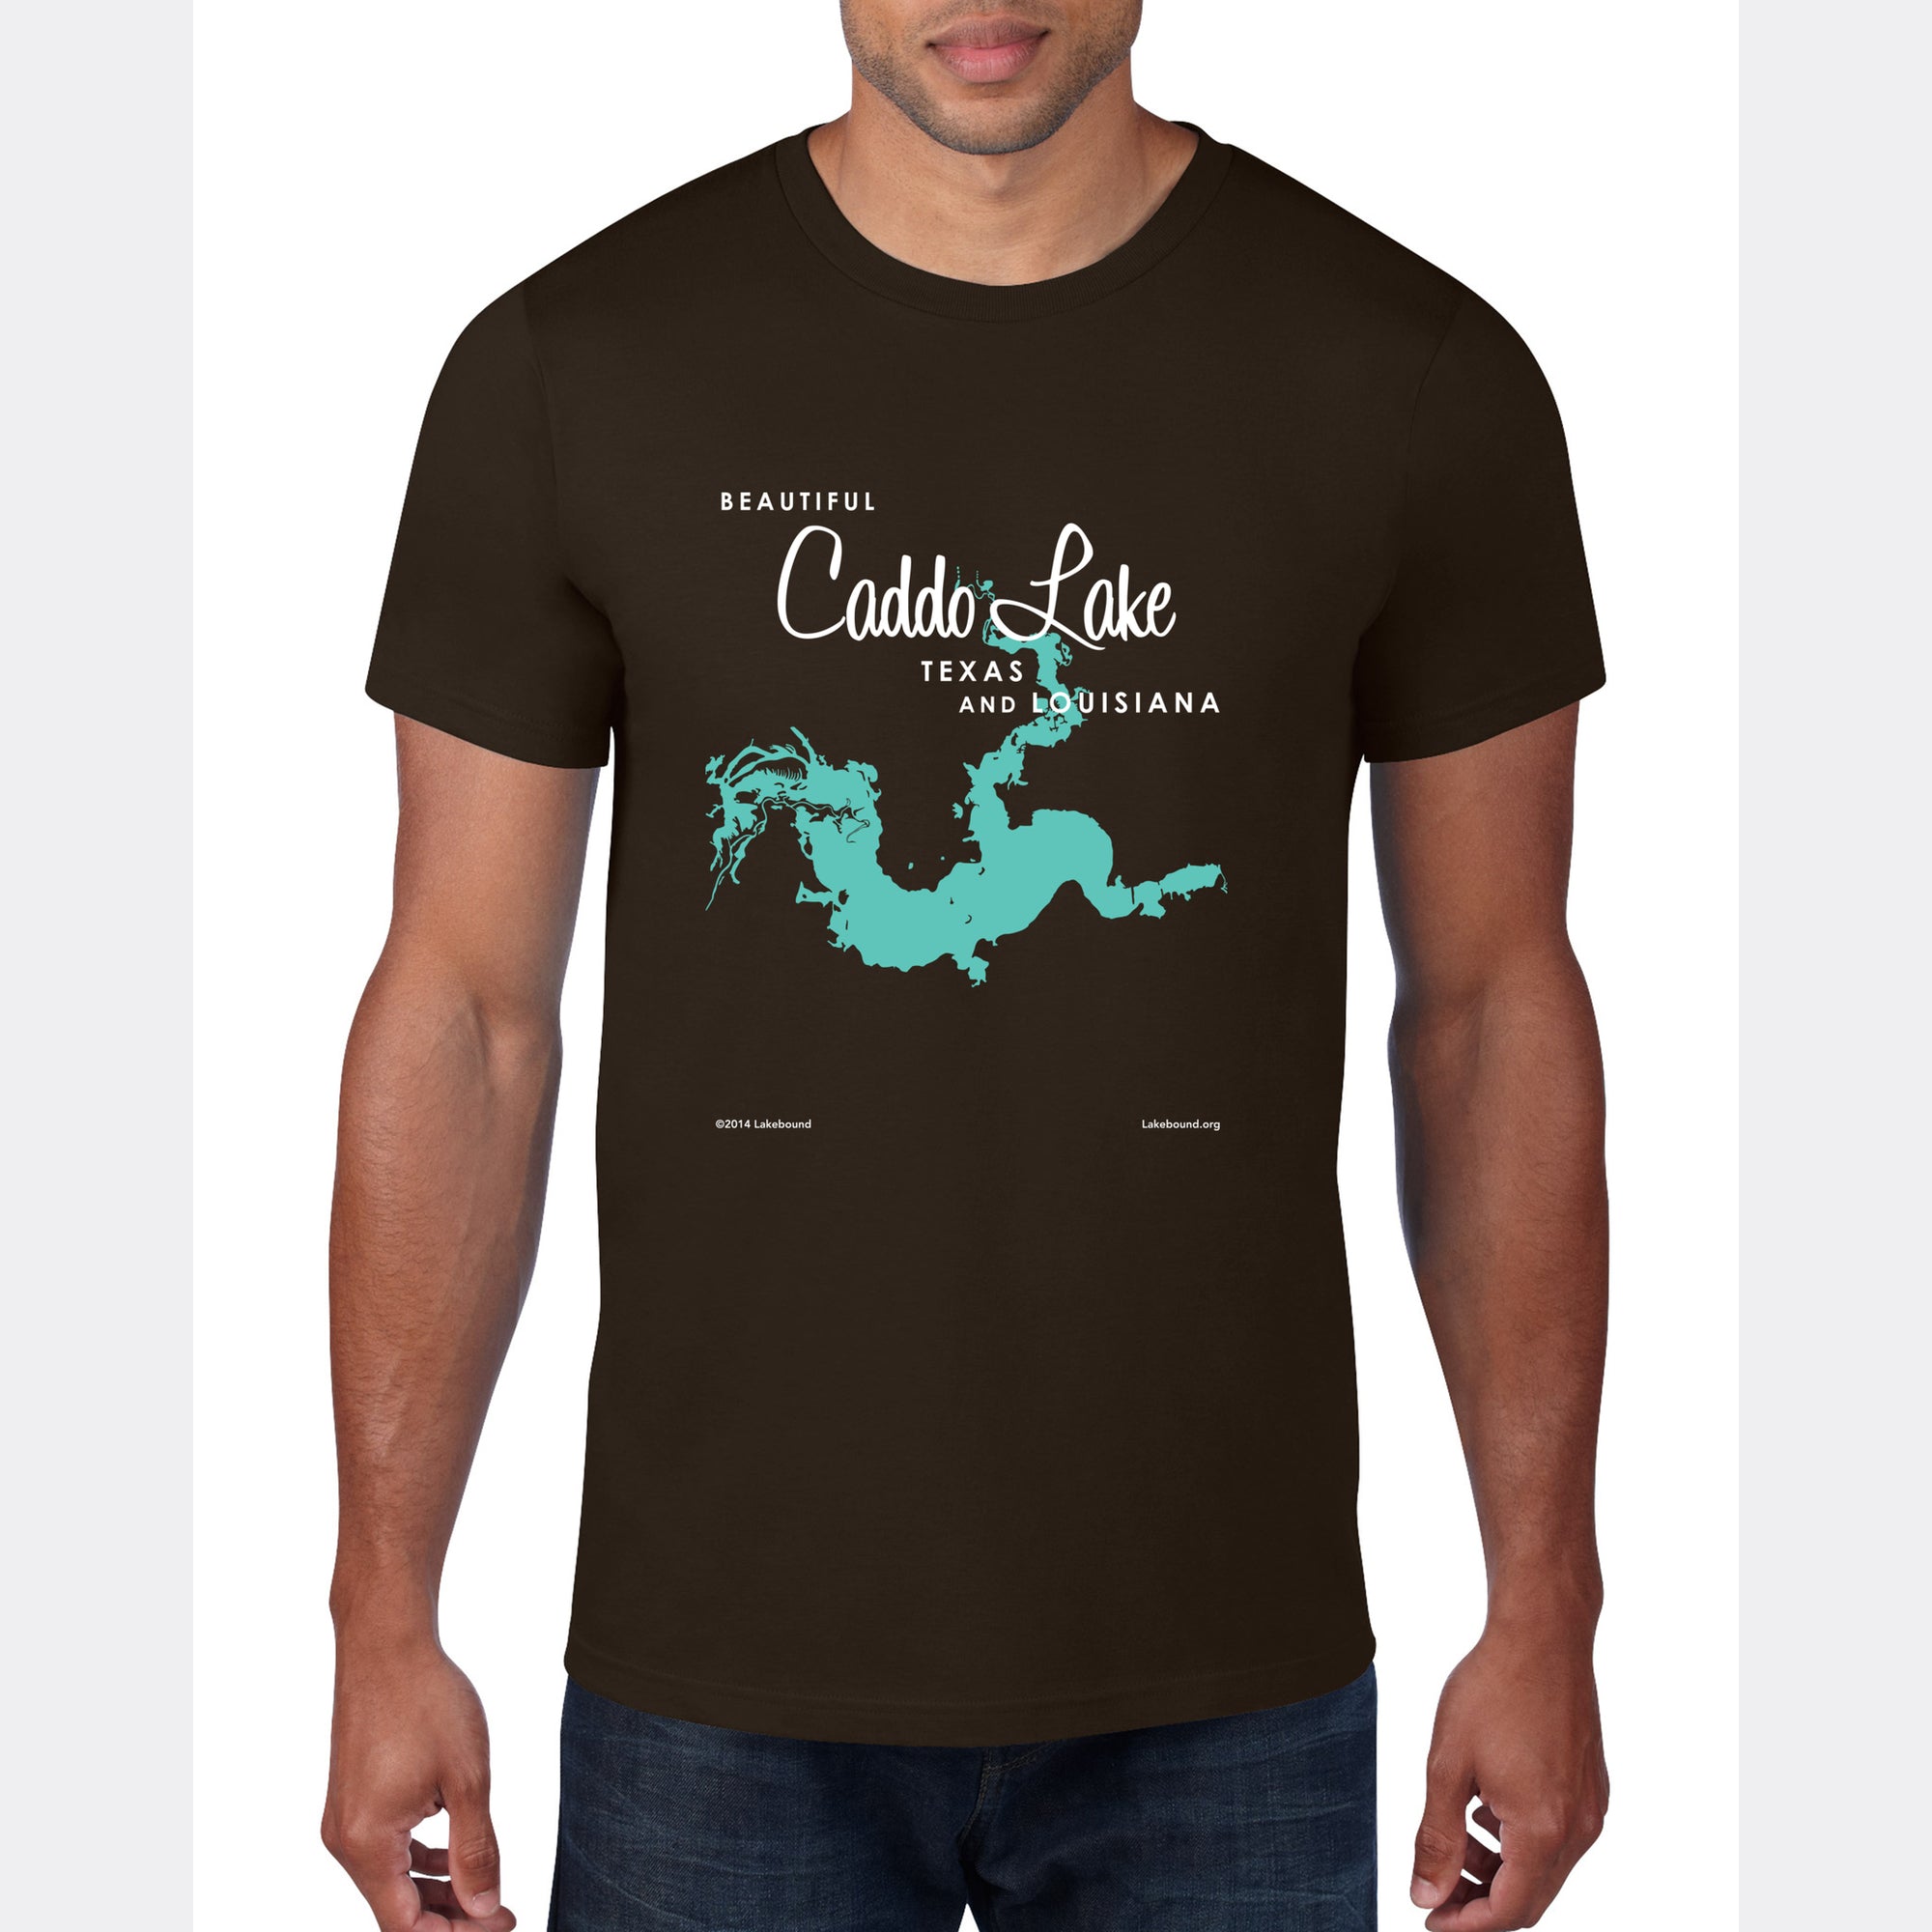 Caddo Lake Texas Louisiana, T-Shirt